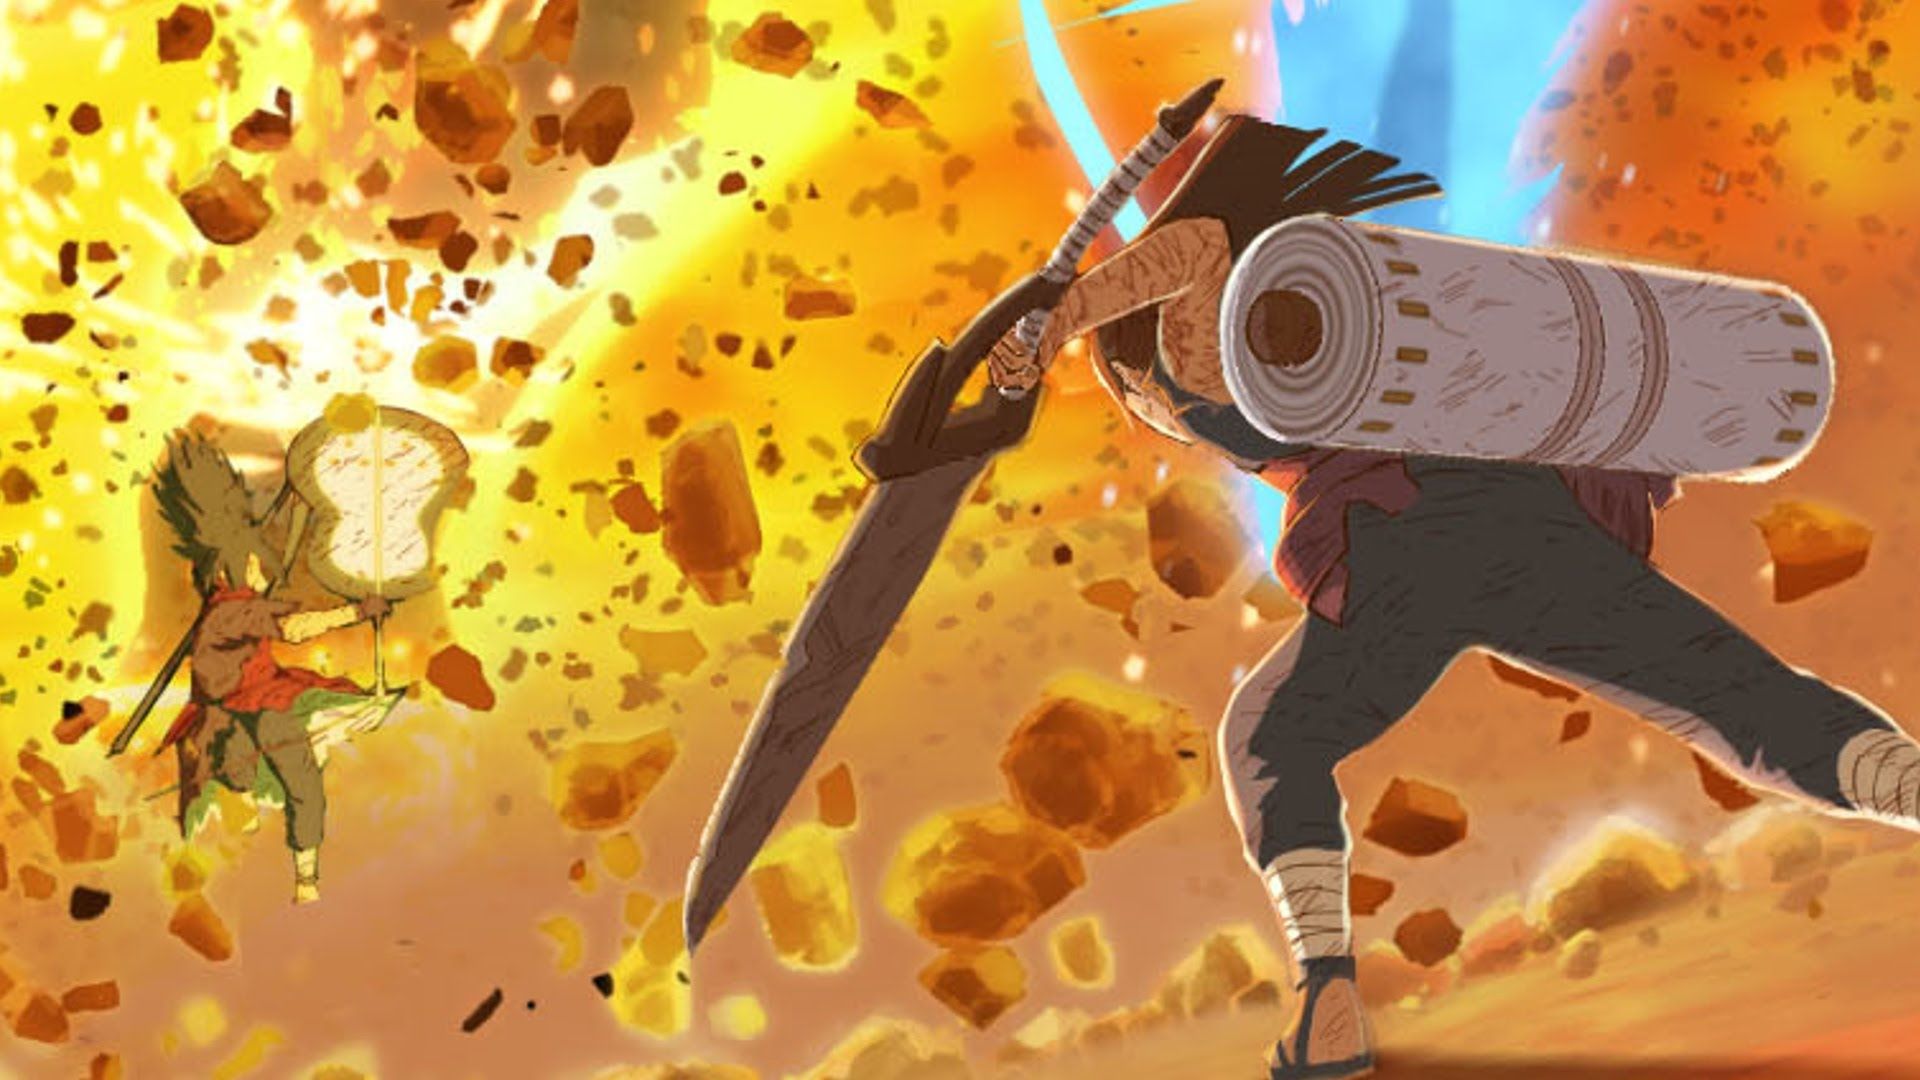 Naruto Shippuden Ultimate Ninja Storm 4 PS4 Review